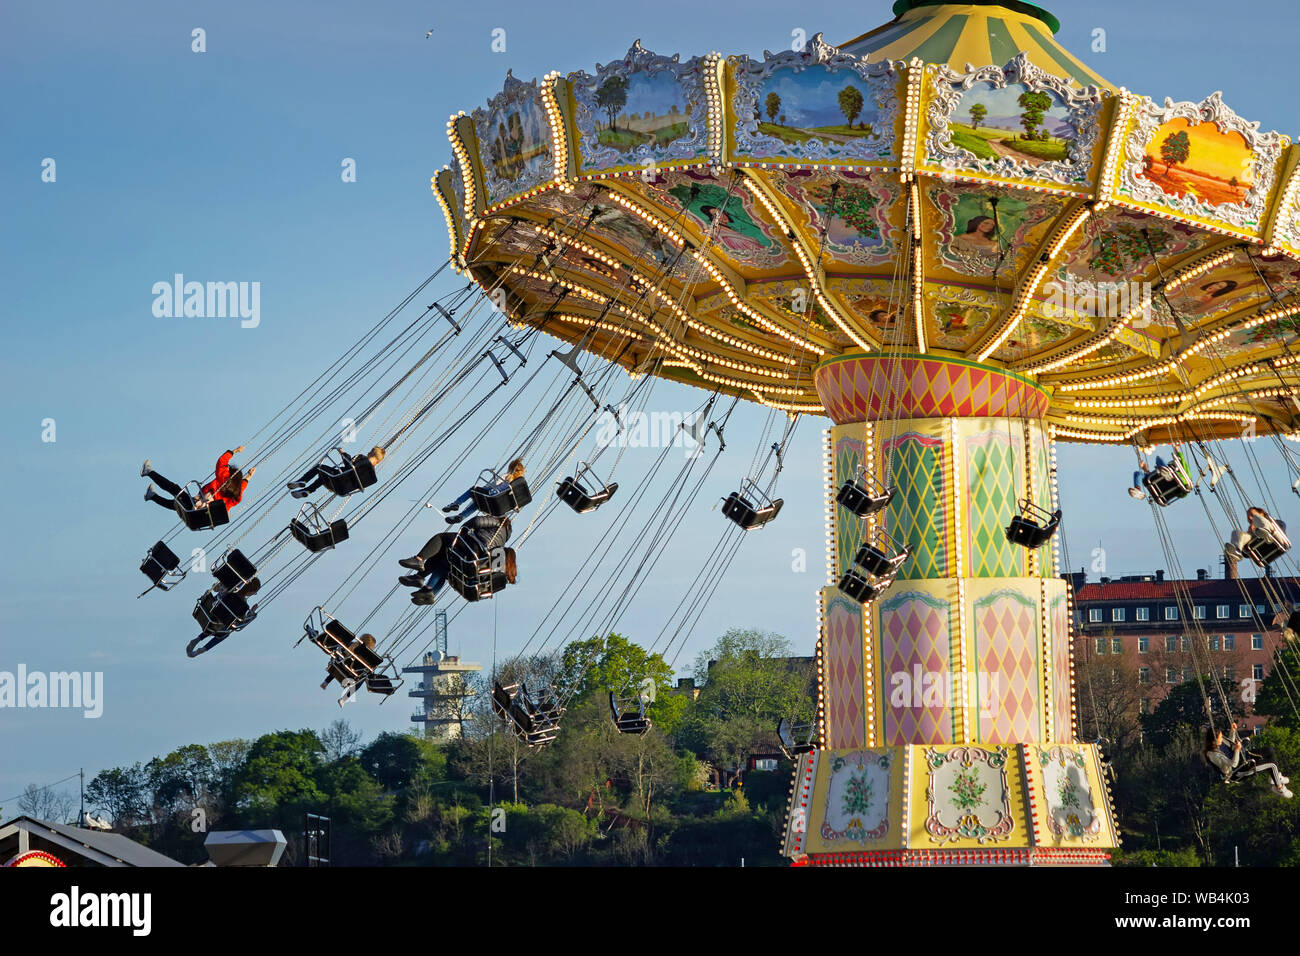 People spinning in Eclipse (Ferris wheel) attraction at the Tivoli Grona Lund amusement park, Djurgarden, Stockholm Sweden Stock Photo